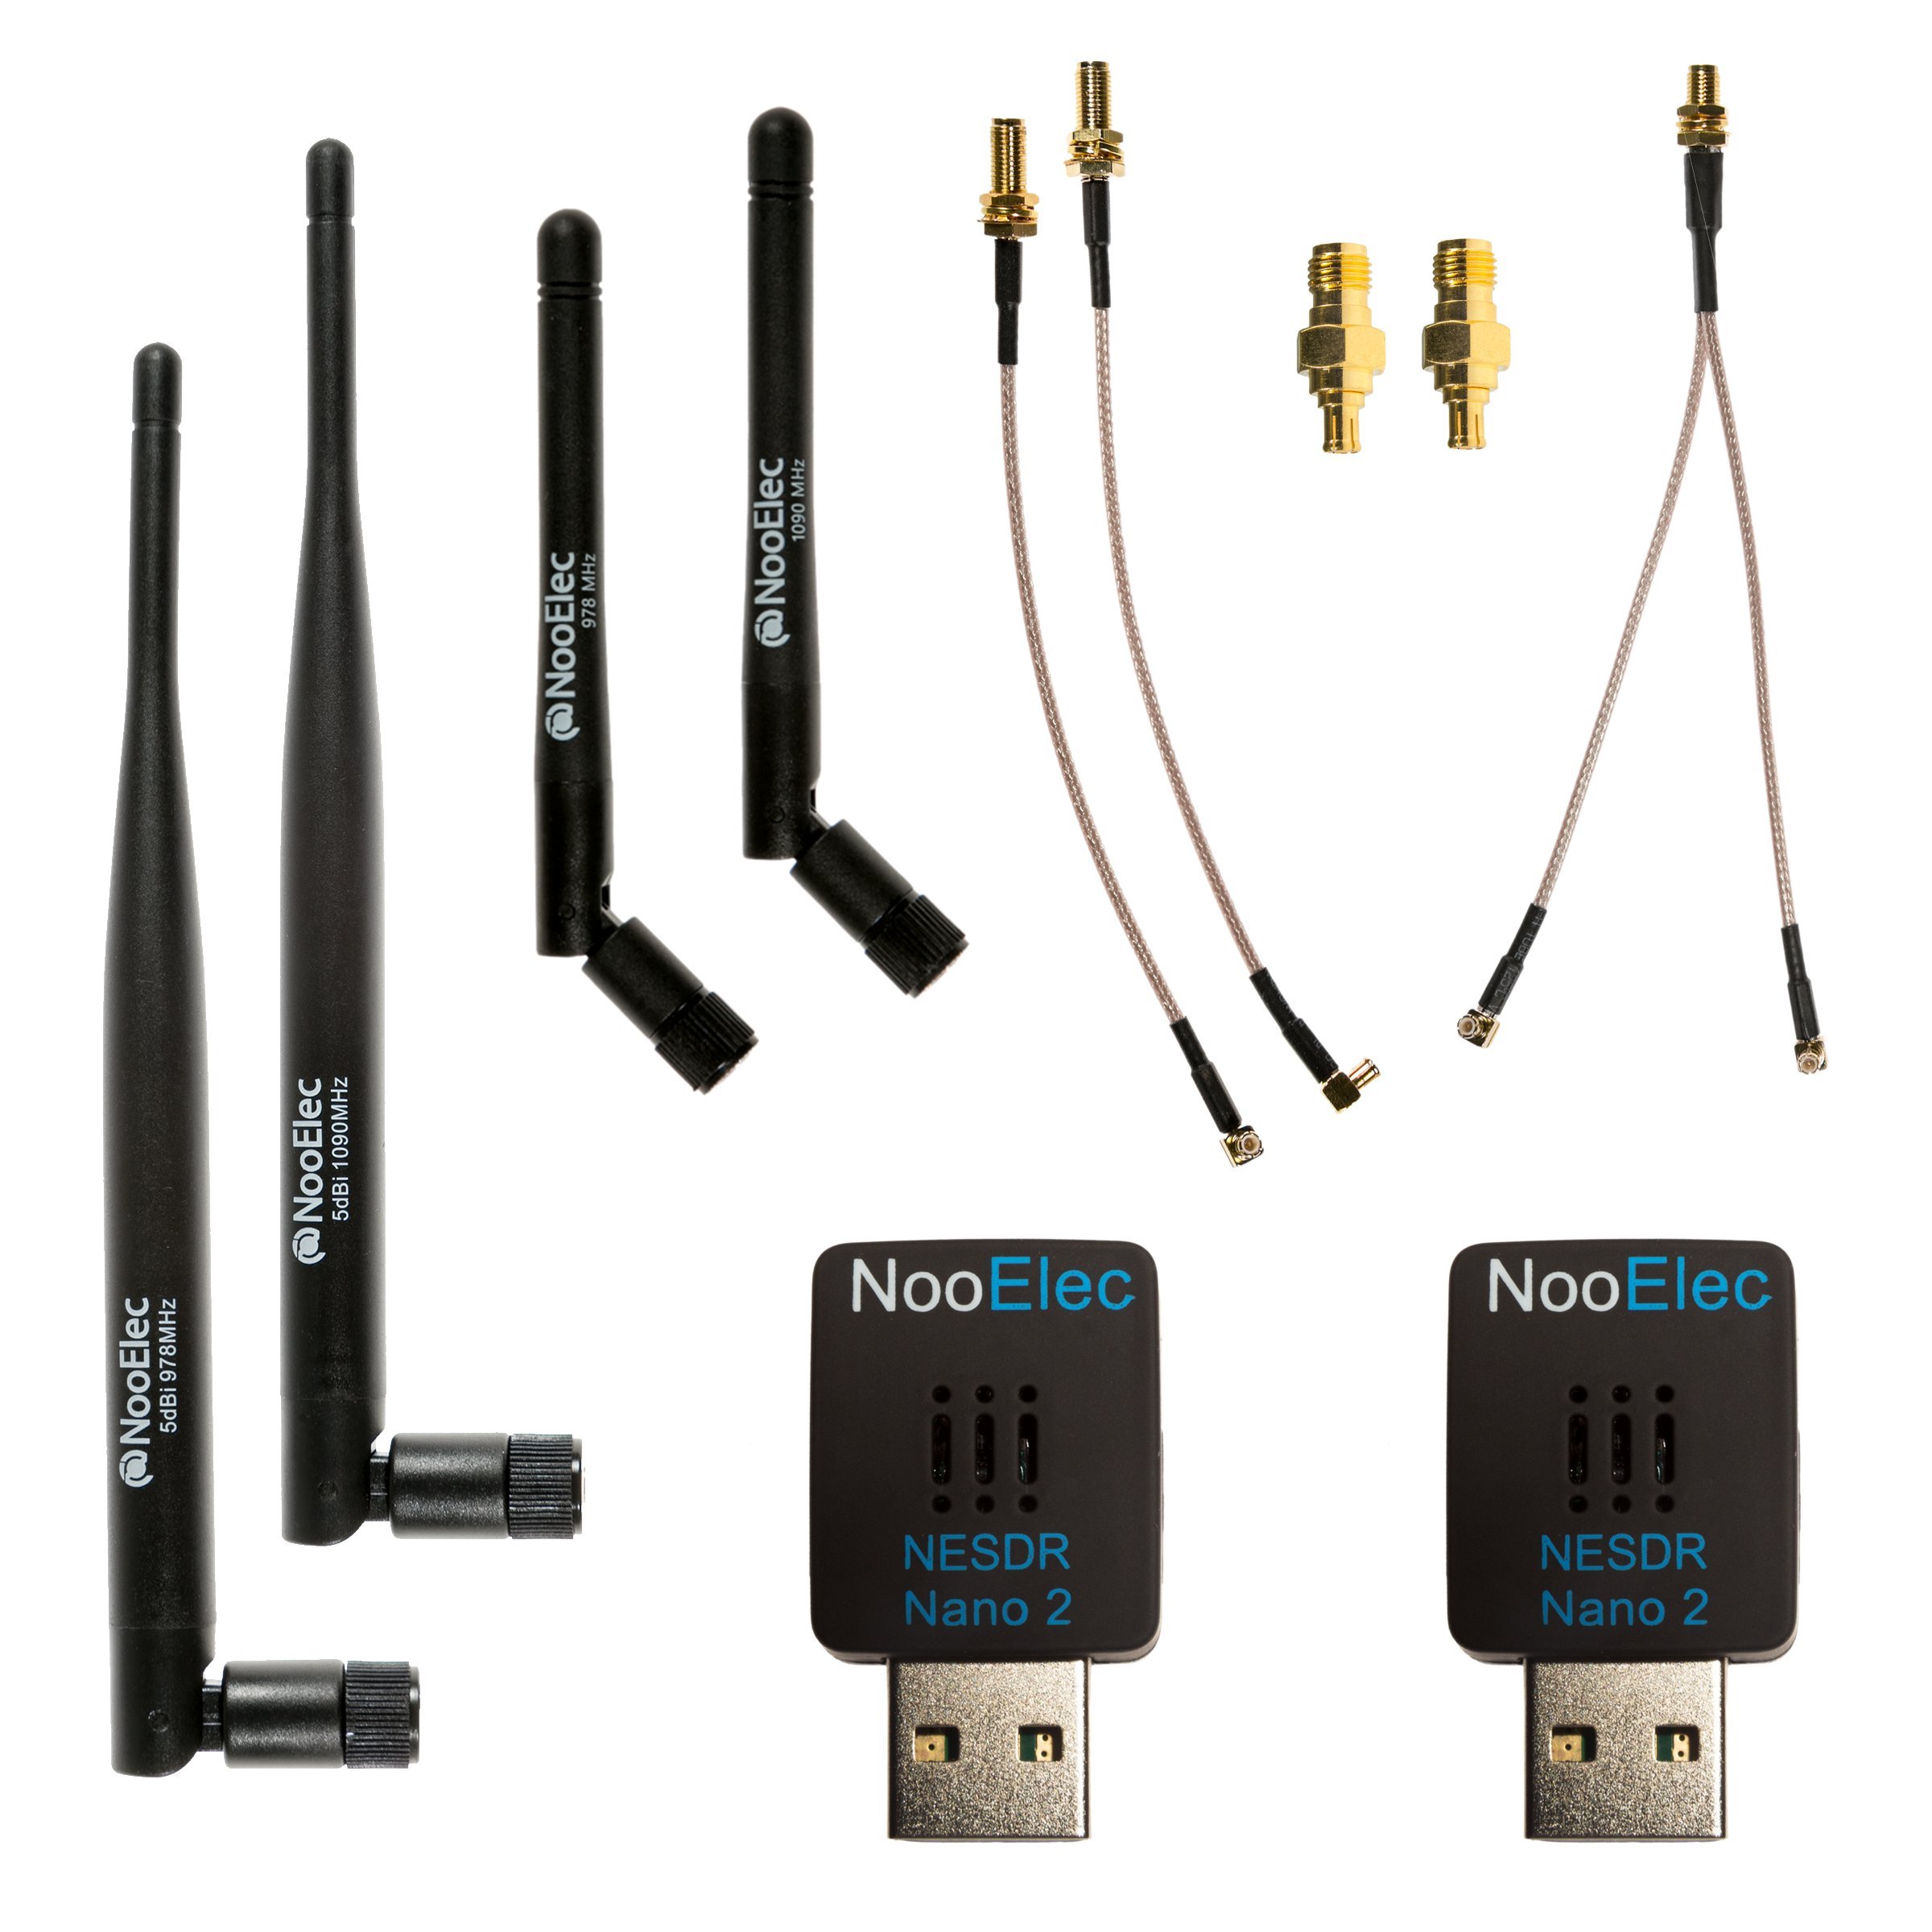 Nooelec Dual-Band NESDR Nano 2 ADS-B (978MHz UAT & 1090MHz 1090ES) Bundle for Stratux, Avare, Foreflight, FlightAware & Other ADS-B Software Applic...